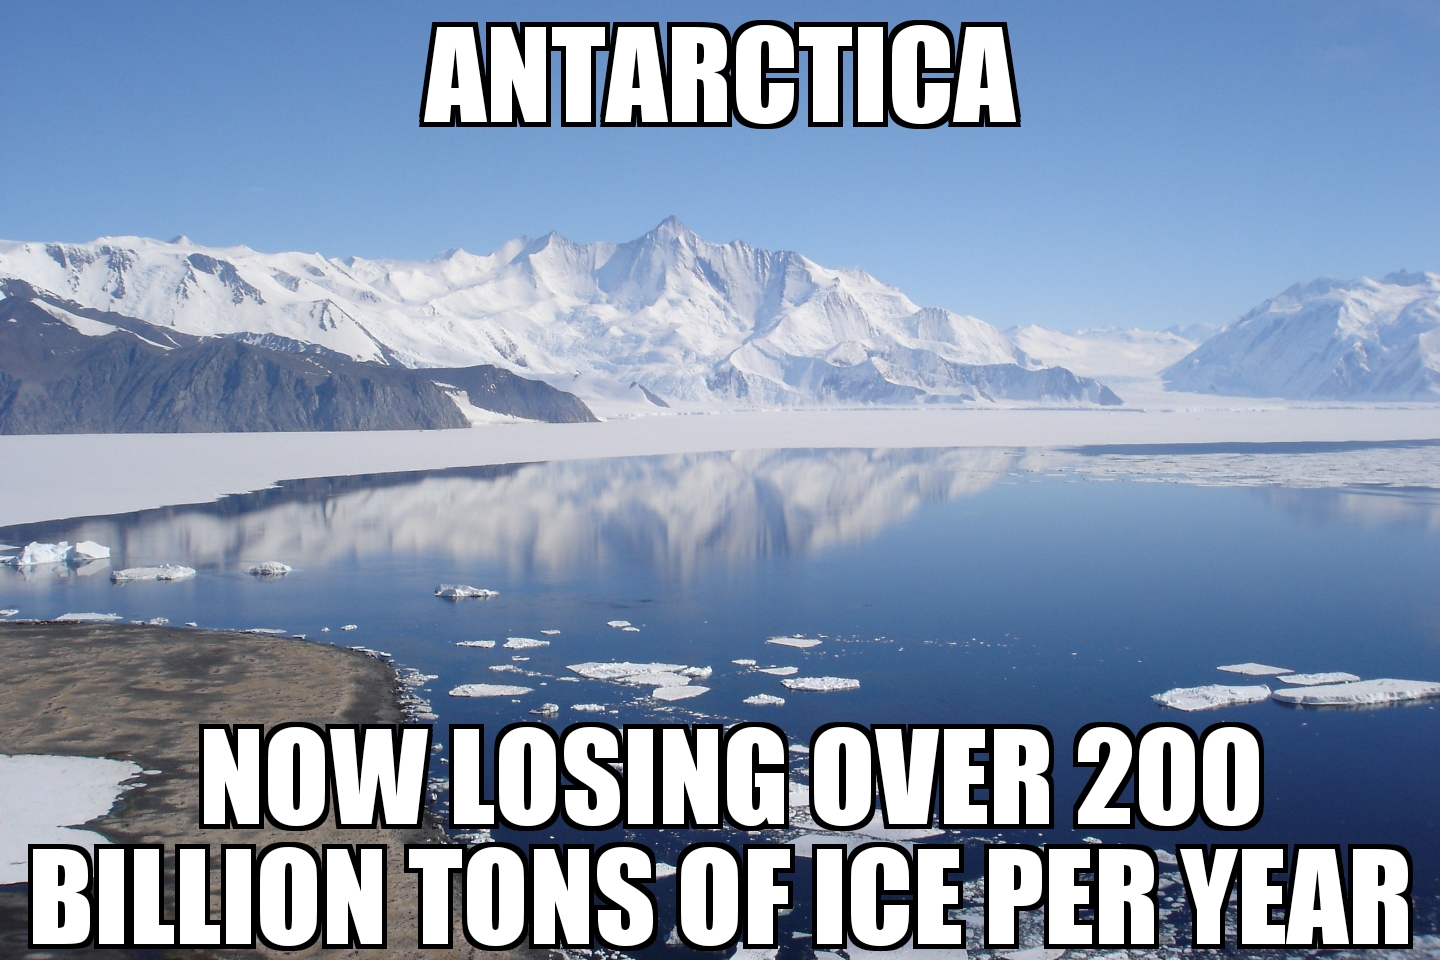 Antarctica ice loss